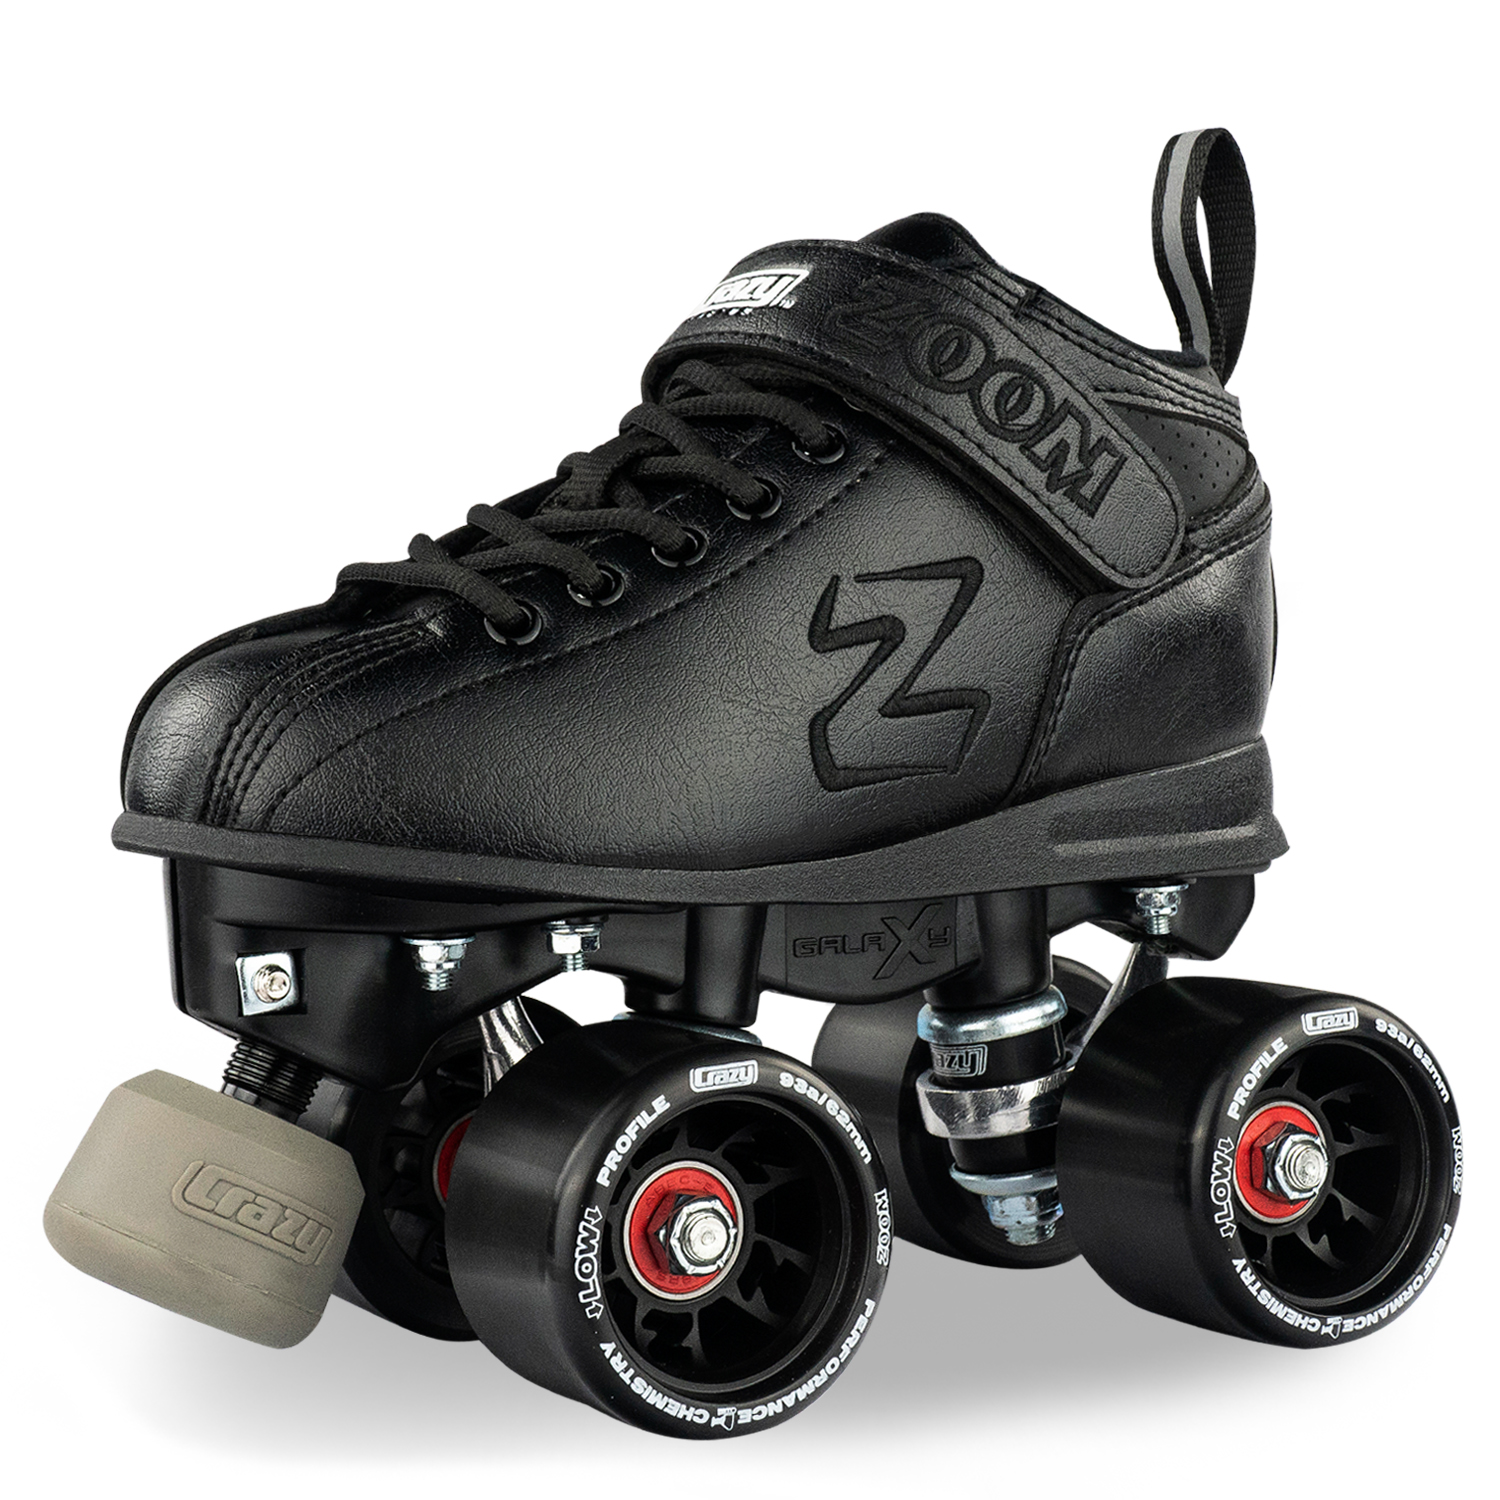 Crazy Skates Zoom Roller Skates - High Performance Speed Skates